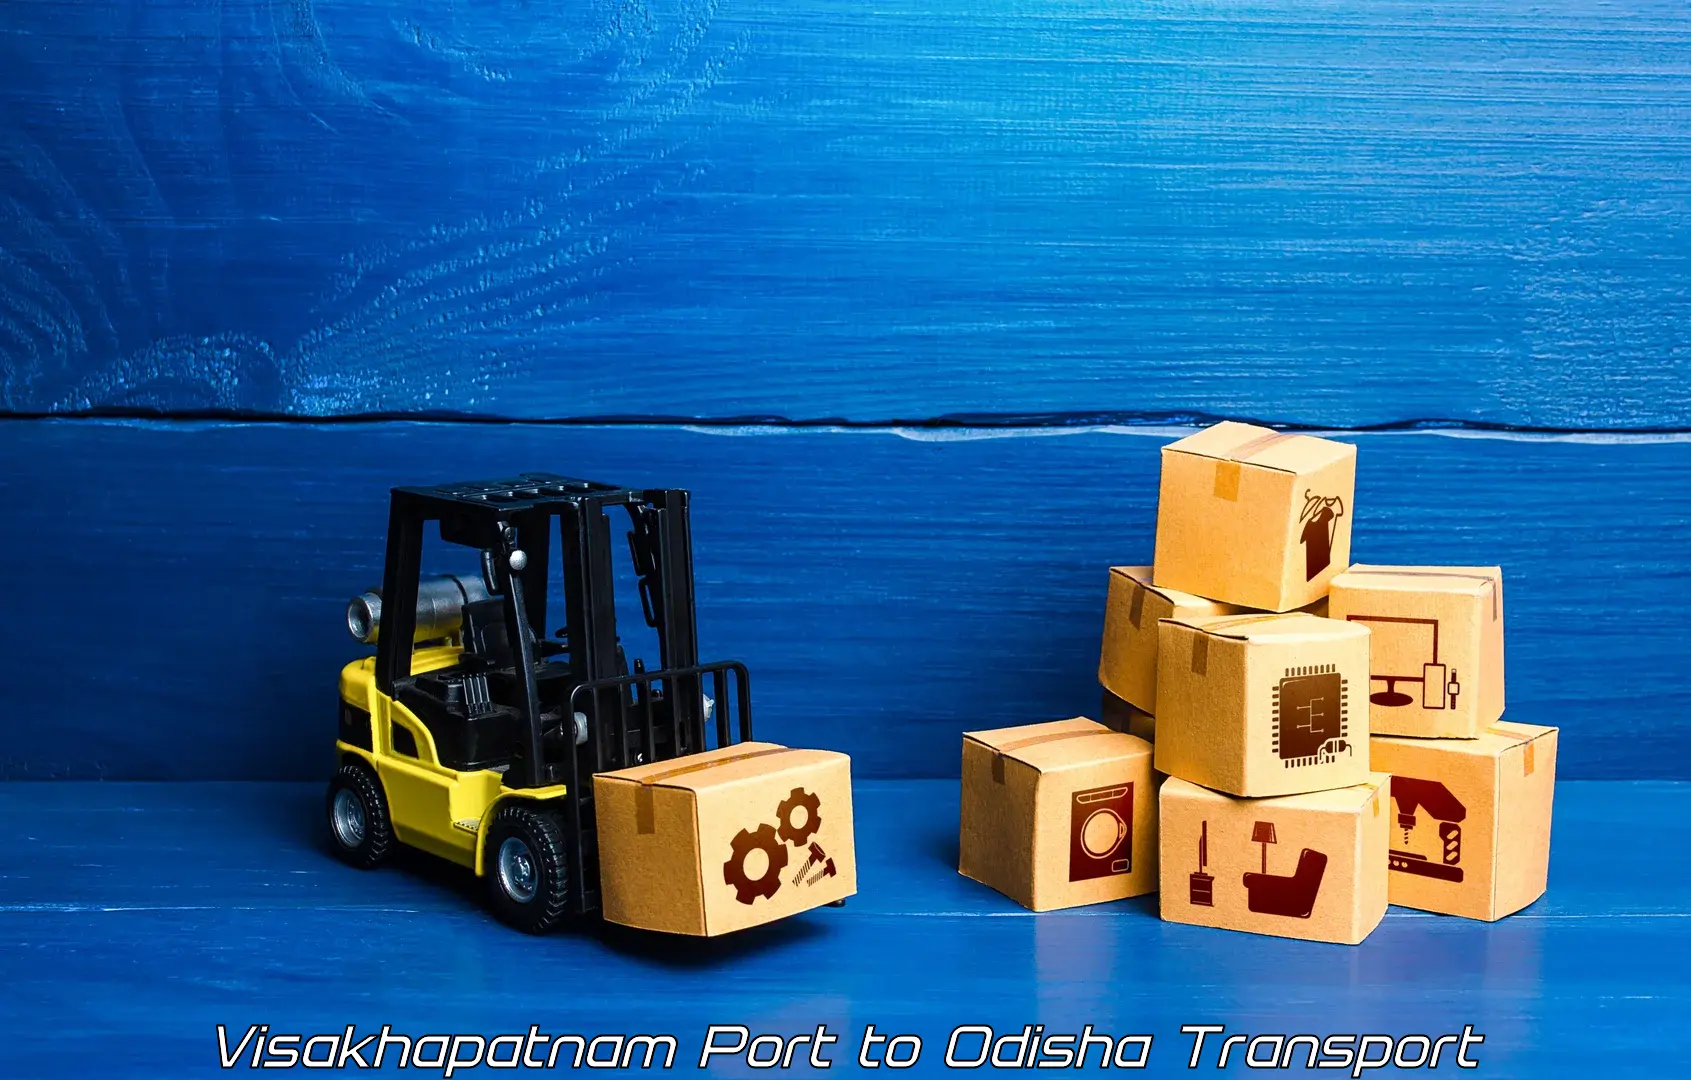 Two wheeler transport services Visakhapatnam Port to Odisha